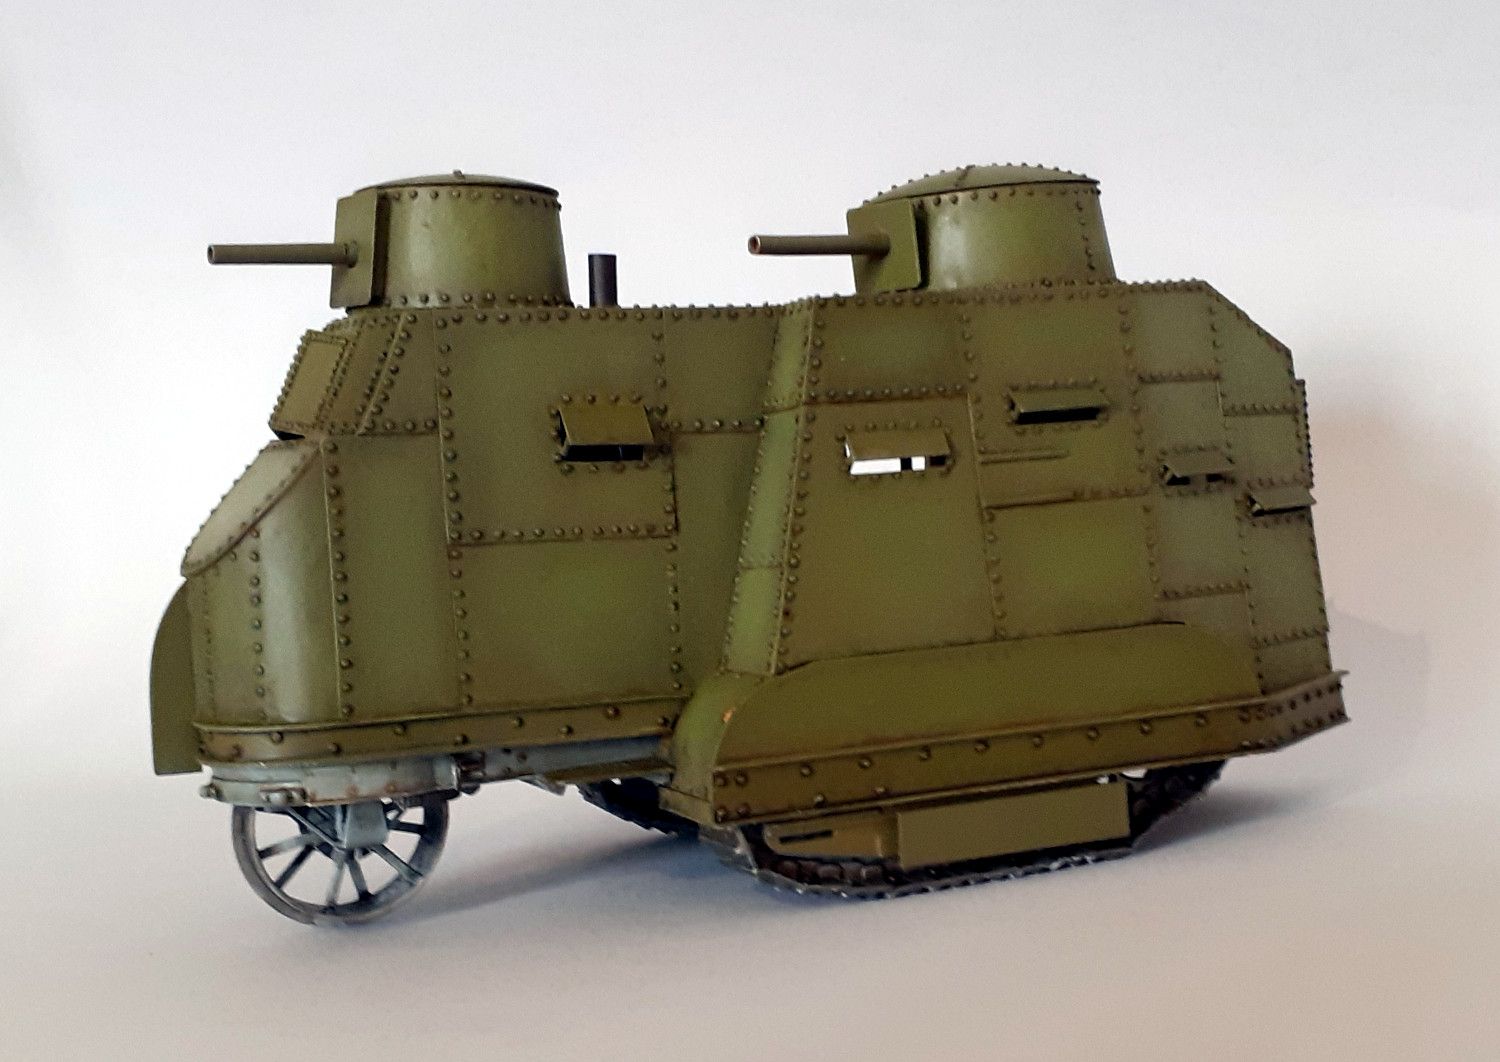 Caterpillar G9 : 1er tank US de l'Histoire [base tracteur Holt Roden + scratch] de Lostiznaos 663bdf3b055af